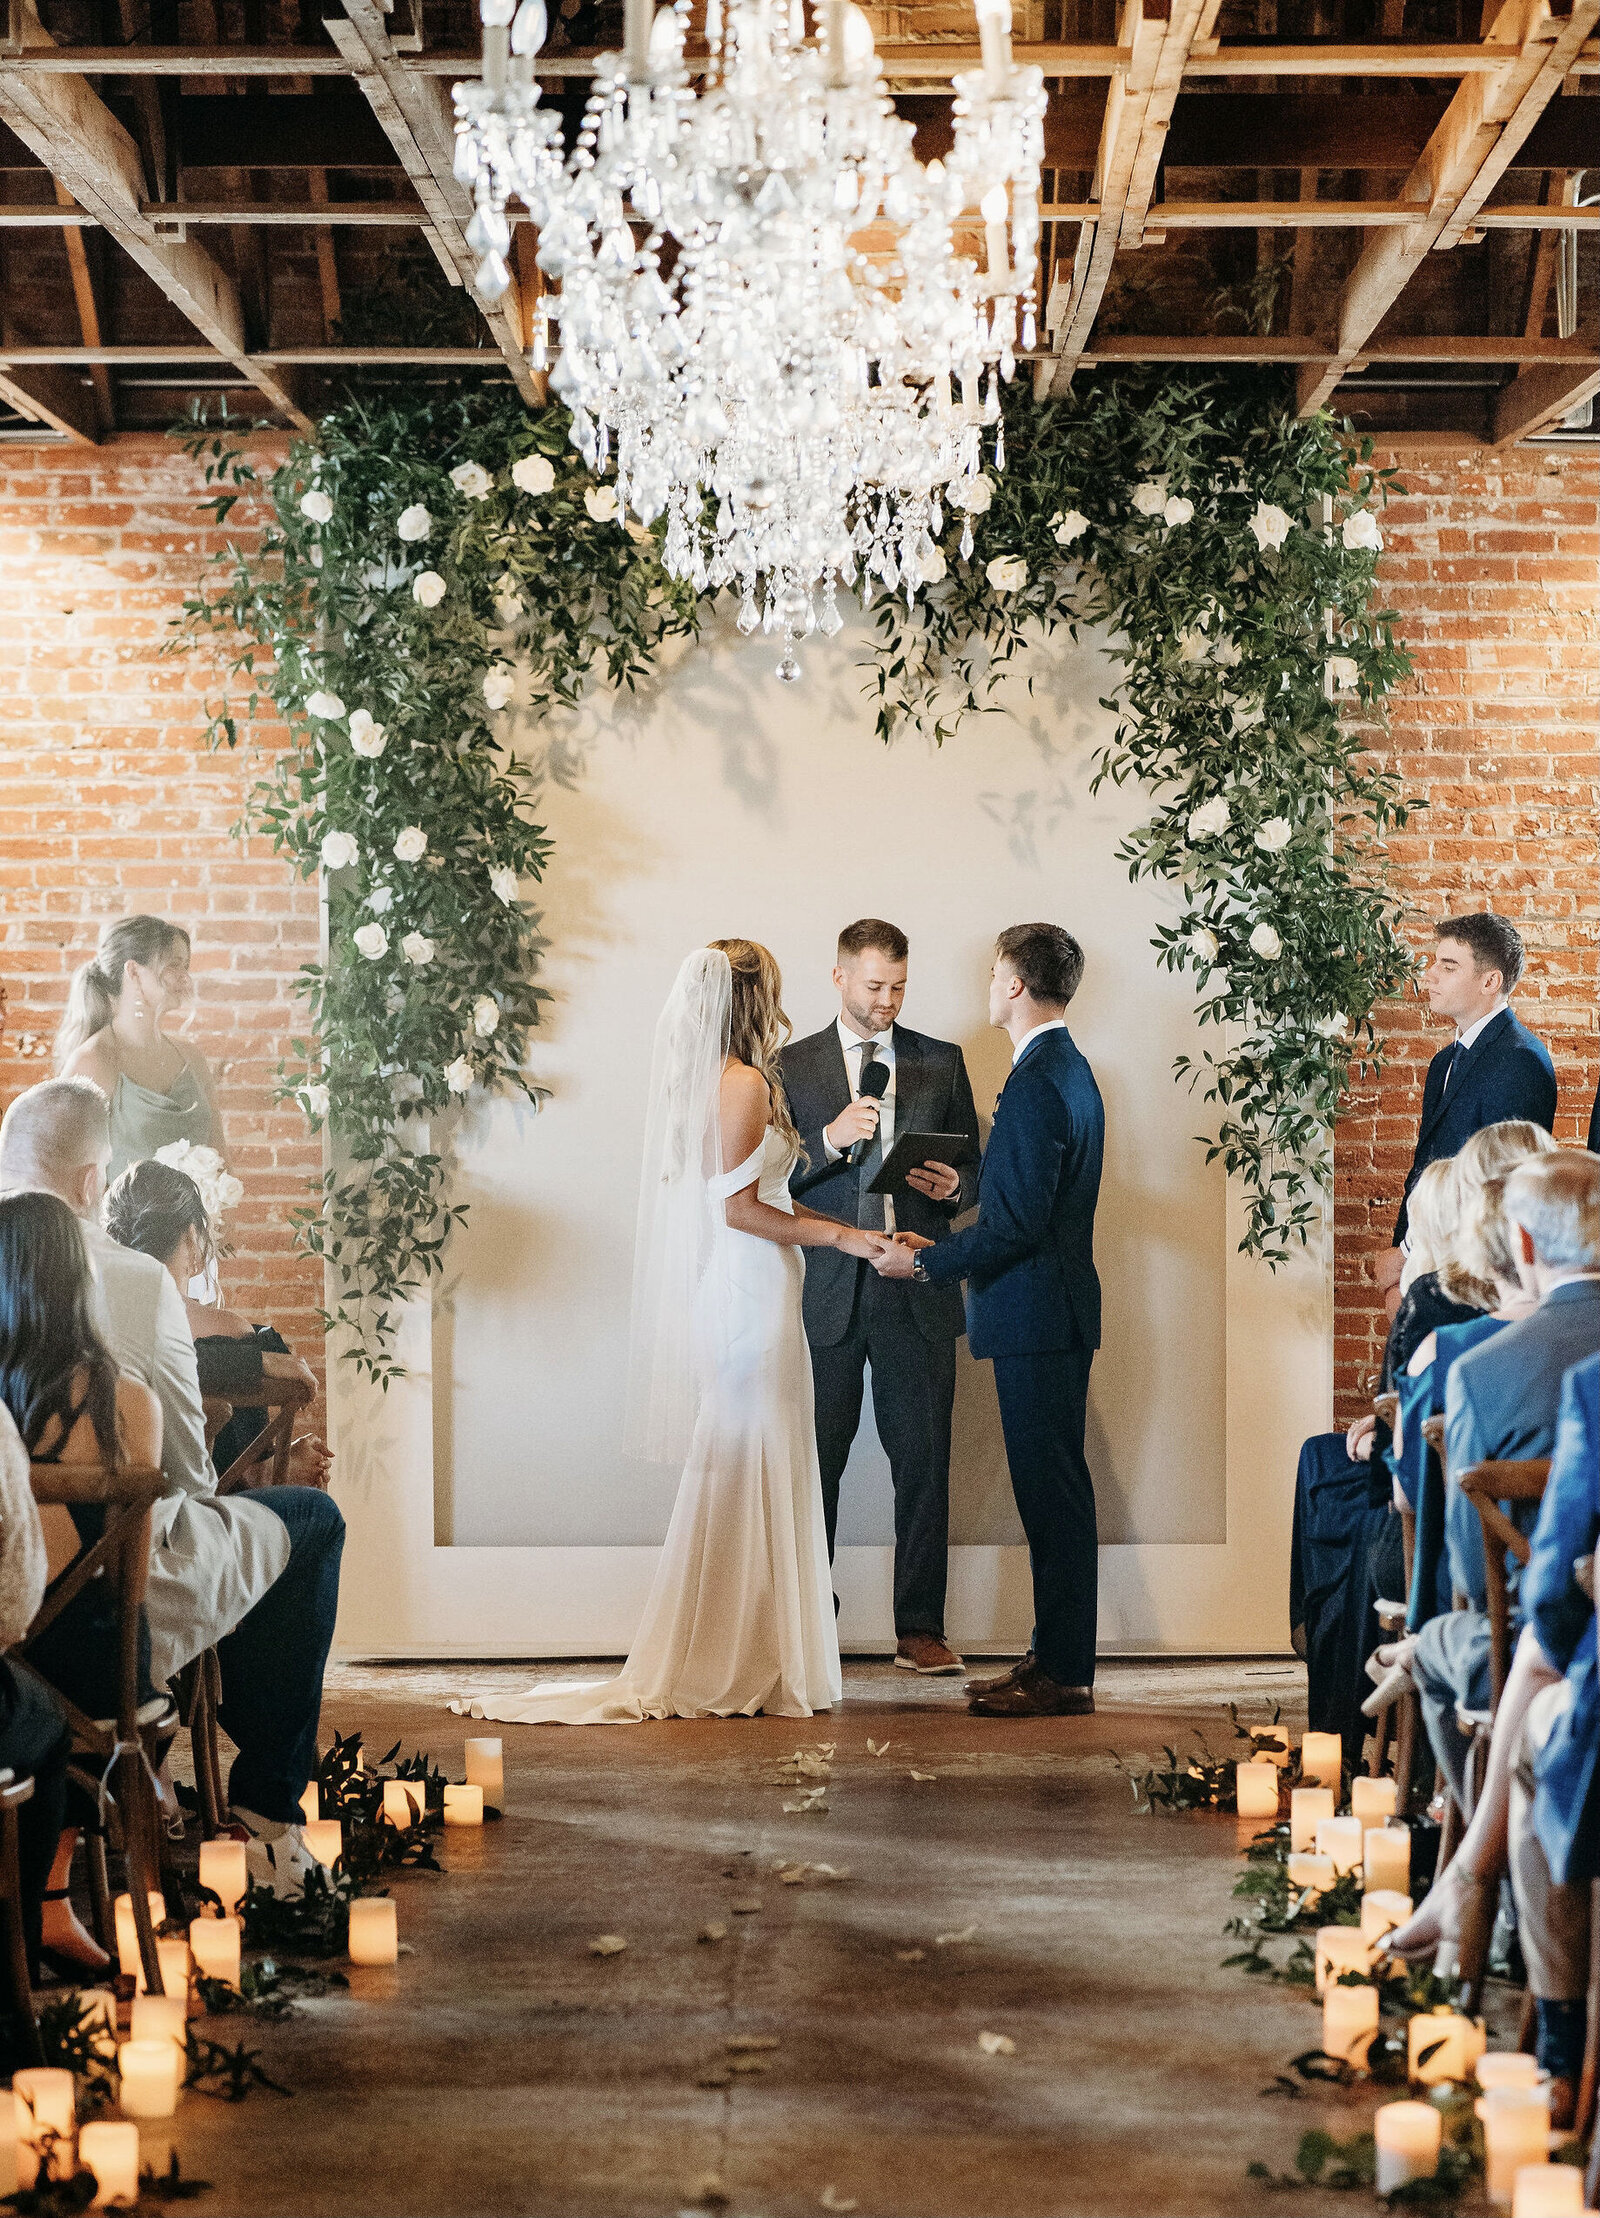 Romantic indoor wedding ceremony at the St Vrain, wedding venue near Denver